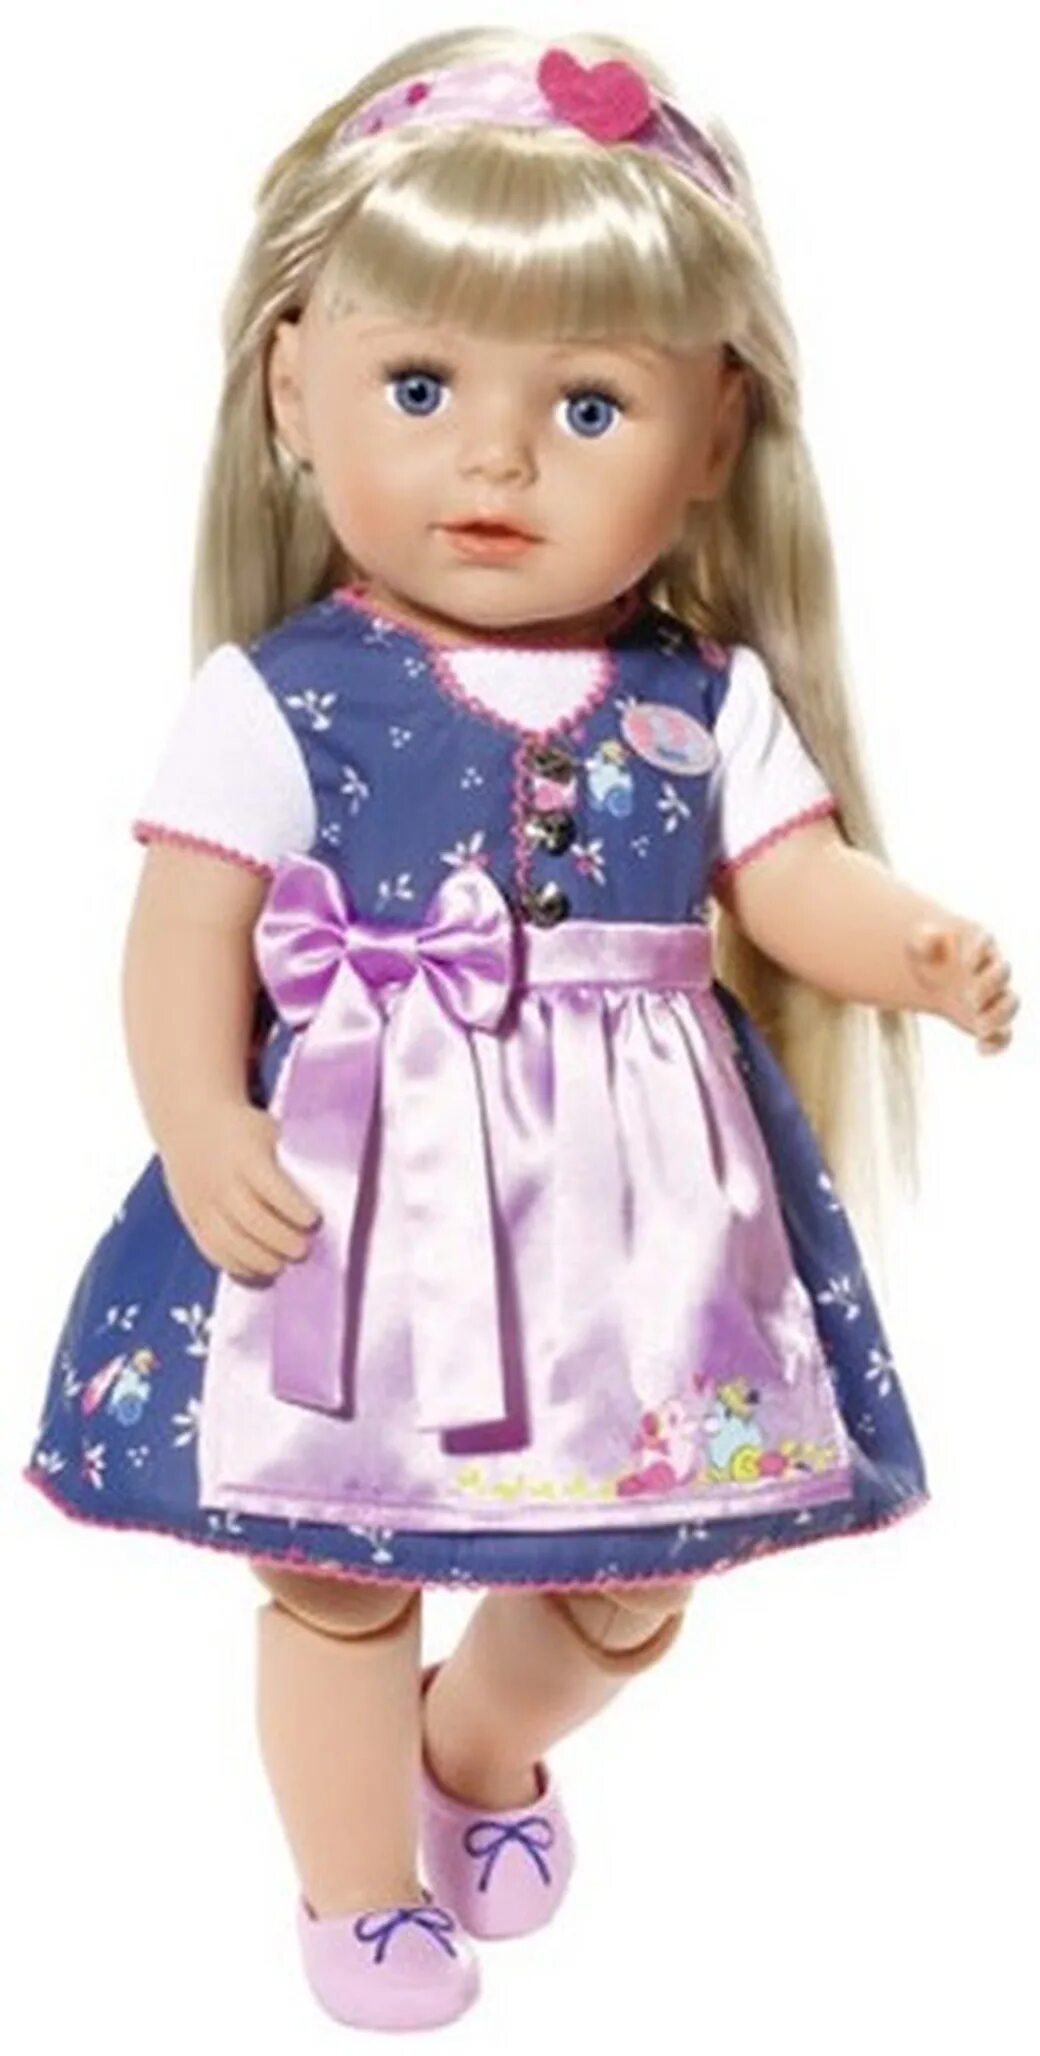 Купить куклу б у. Платье для Беби Борн. Zapf Creation одежда для куклы Baby born 824559. Беби Бон платьице. Куклы для девочек.